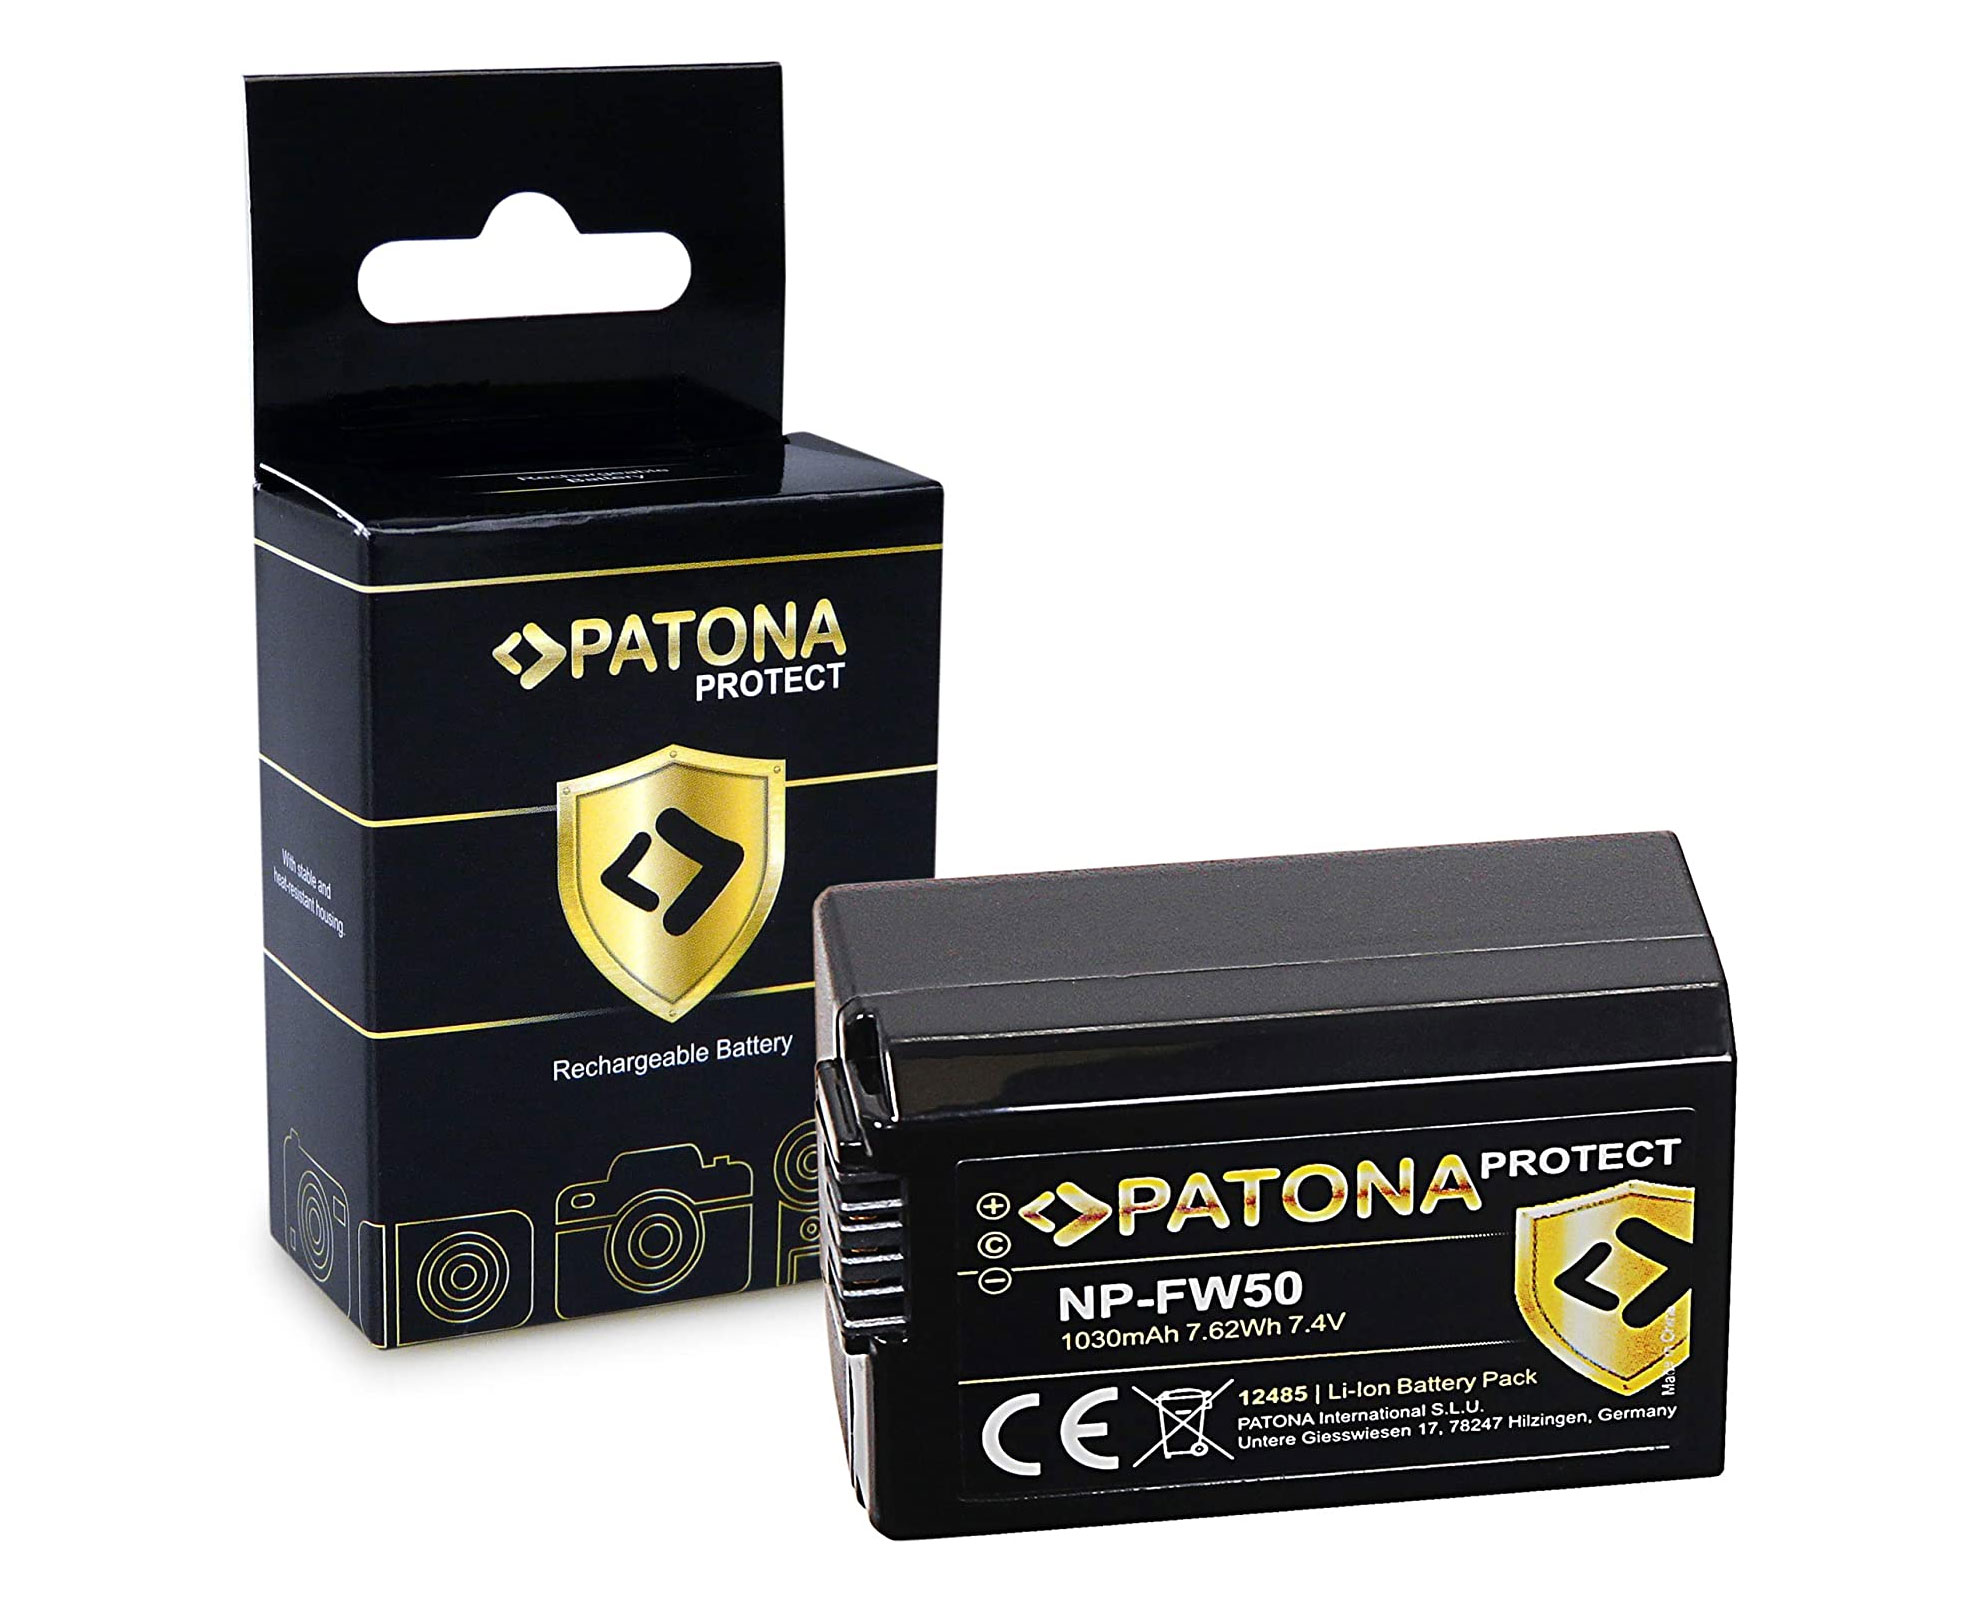 Patona Protect NP-FW50